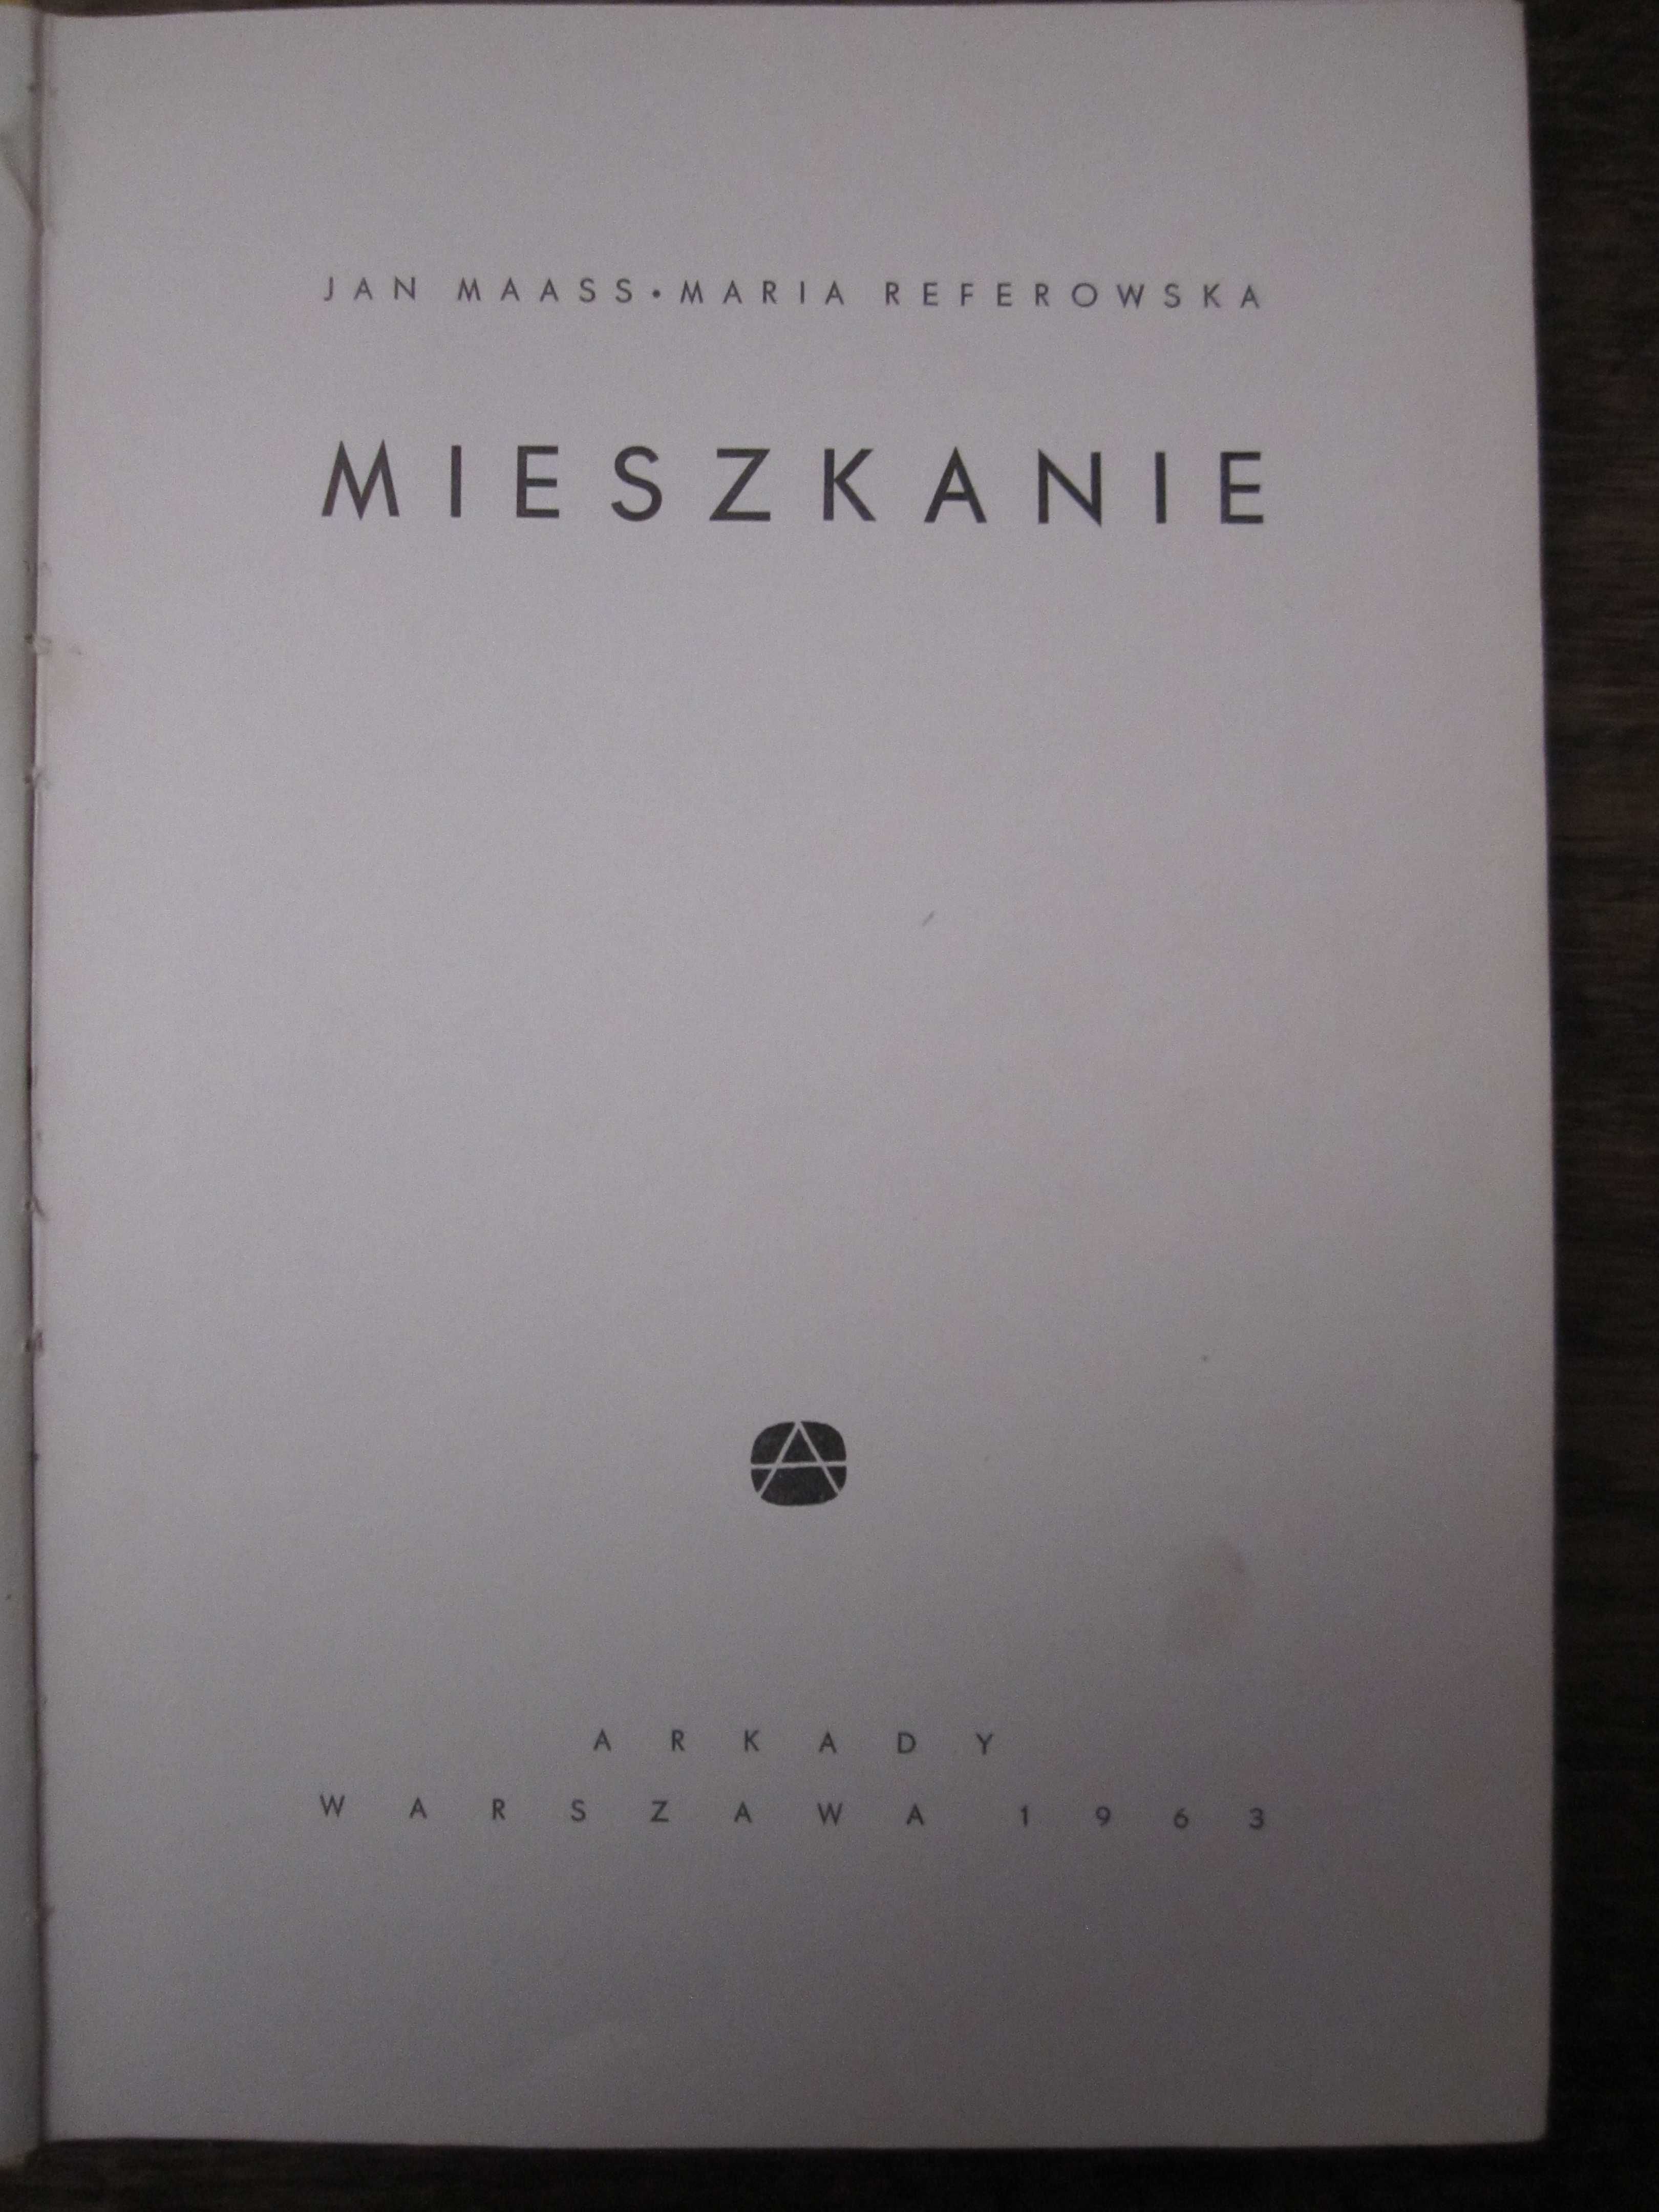 "MIESZKANIE"  - Jan Mass, Maria Referowska